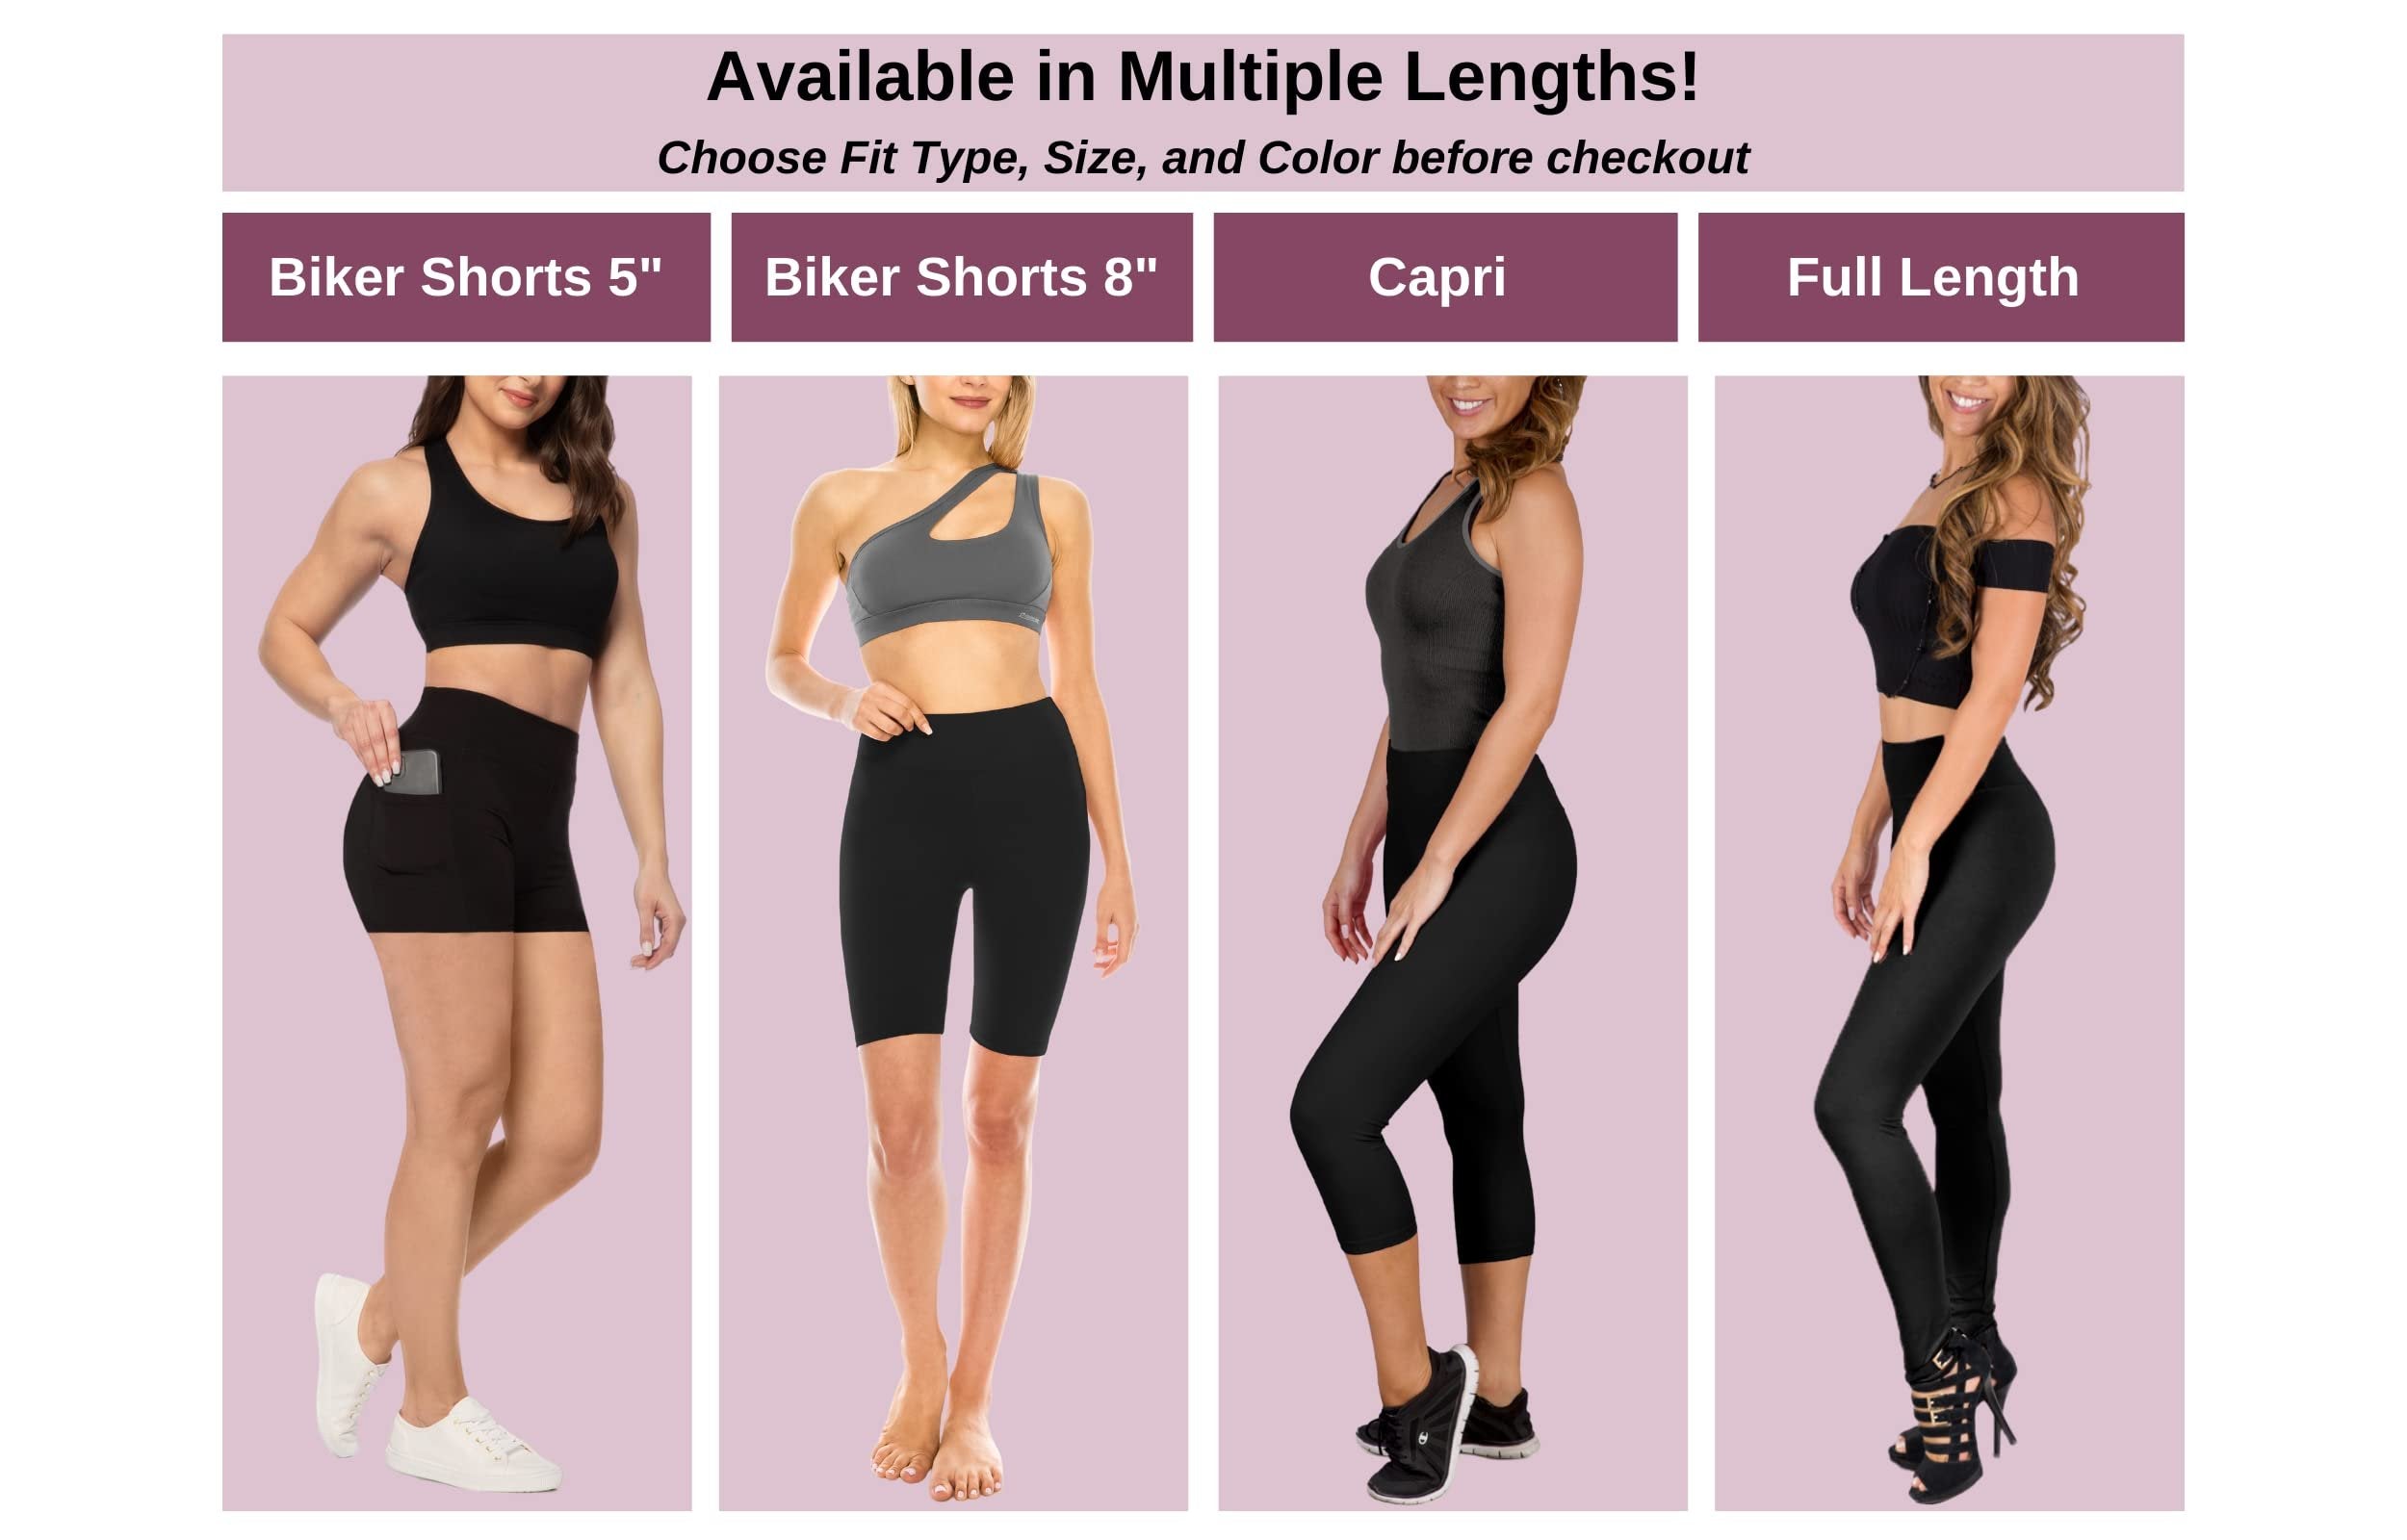 SATINA High Waisted Leggings for Women - Workout Leggings for Regular & Plus Size Women - Fuchsia Leggings Women - Yoga Leggings for Women |3 Inch Waistband (One Size, Fuchsia)